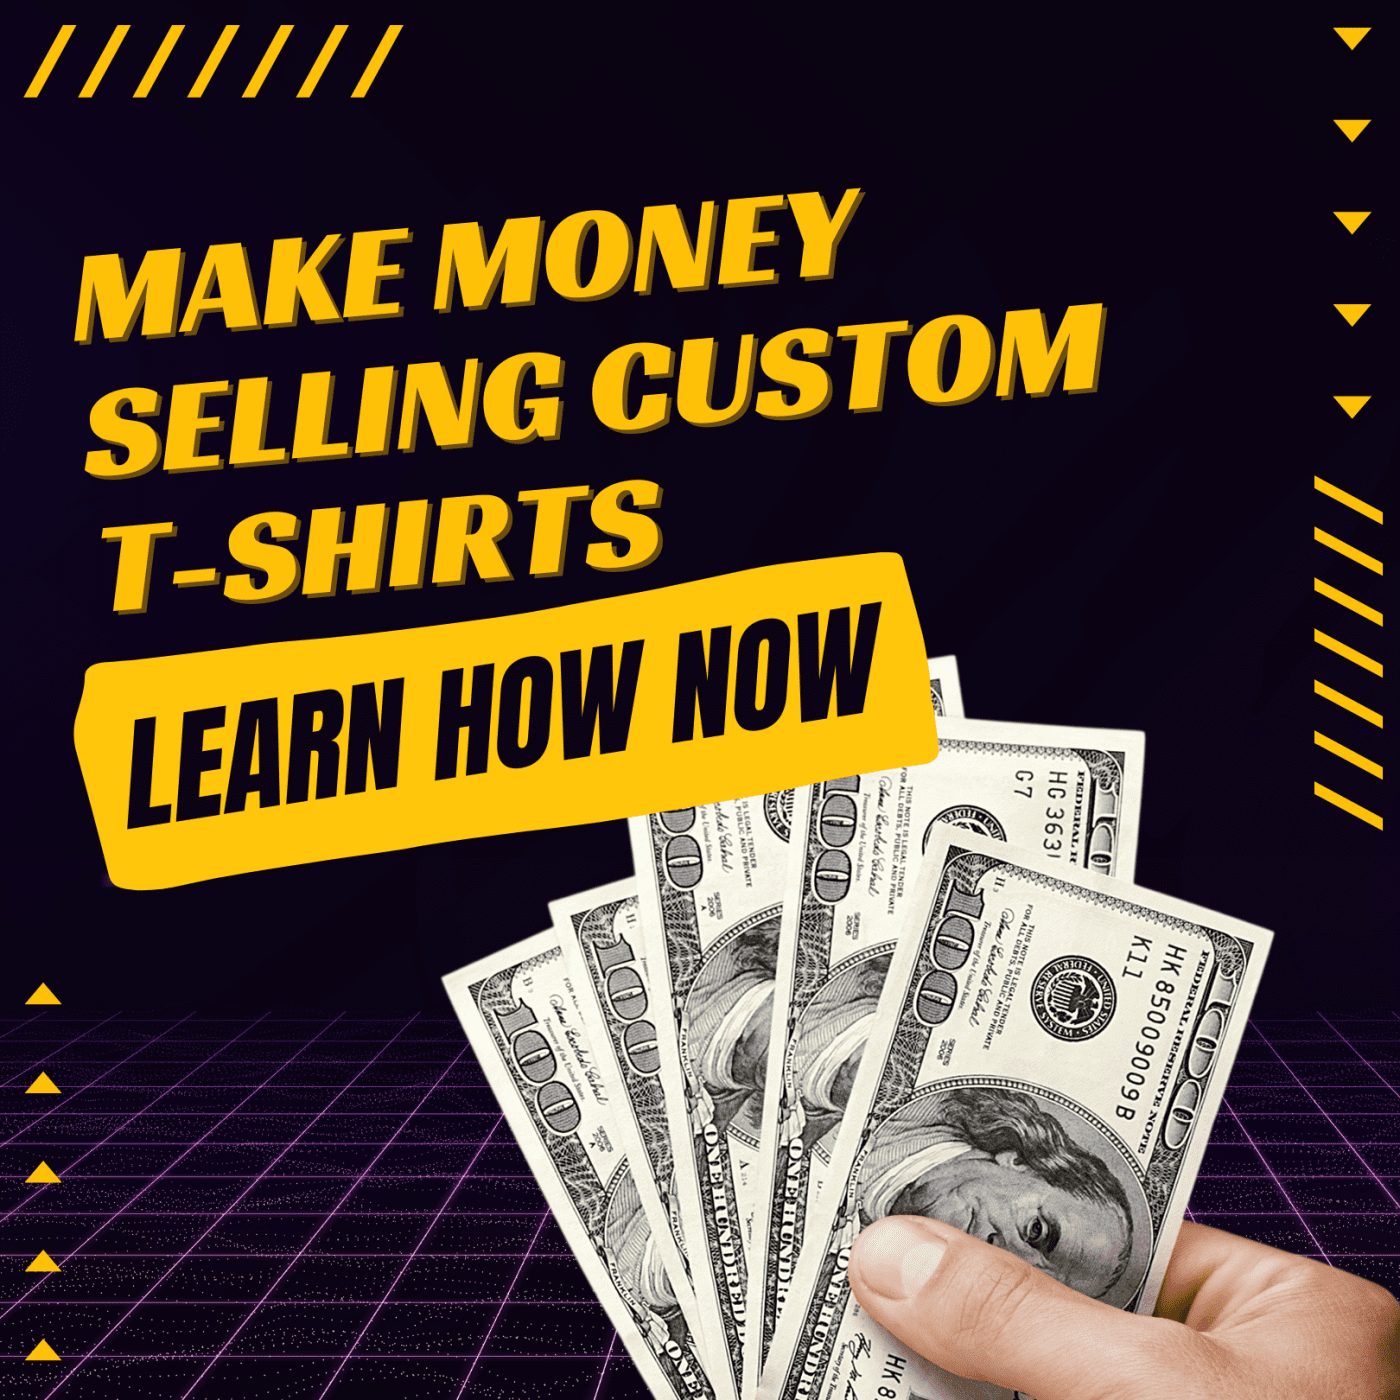 Make-Money-Selling-Custom-T-Shirts-Learn-How-Now, custom t shirts, custom t-shirts, custom tshirts, t-shirt printing, tshirt printing, t shirt printing